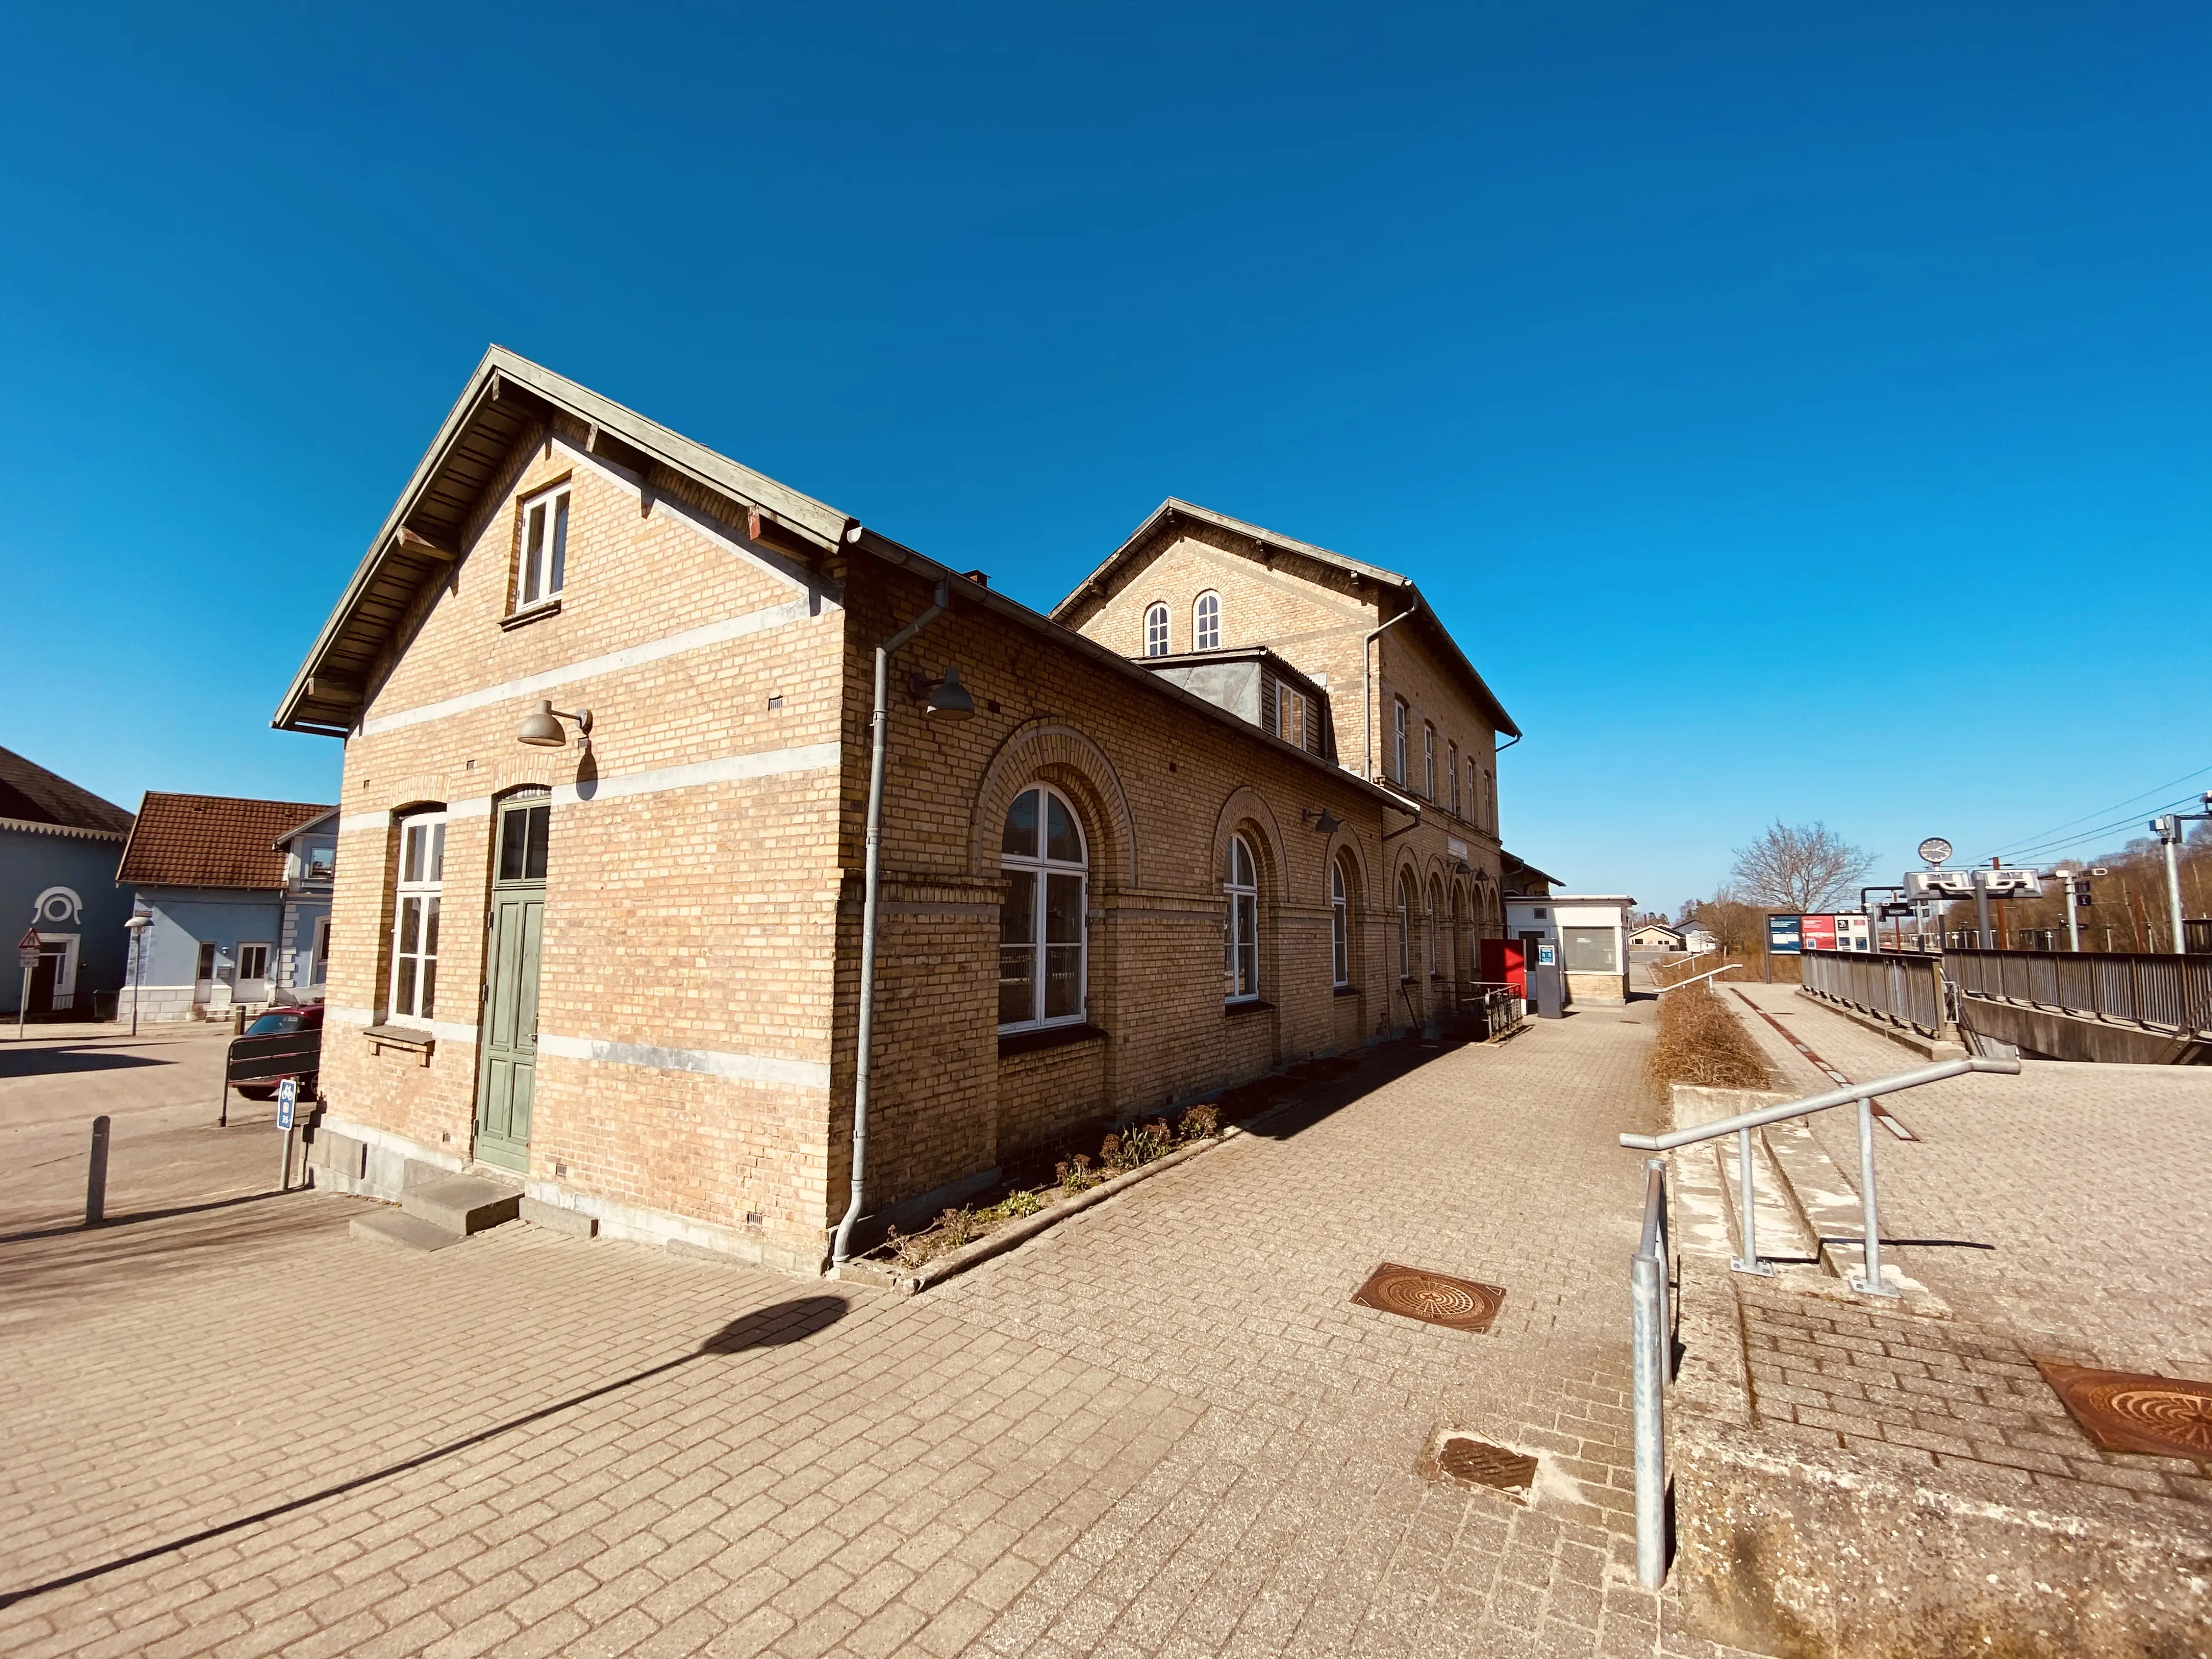 Lunderskov Station.